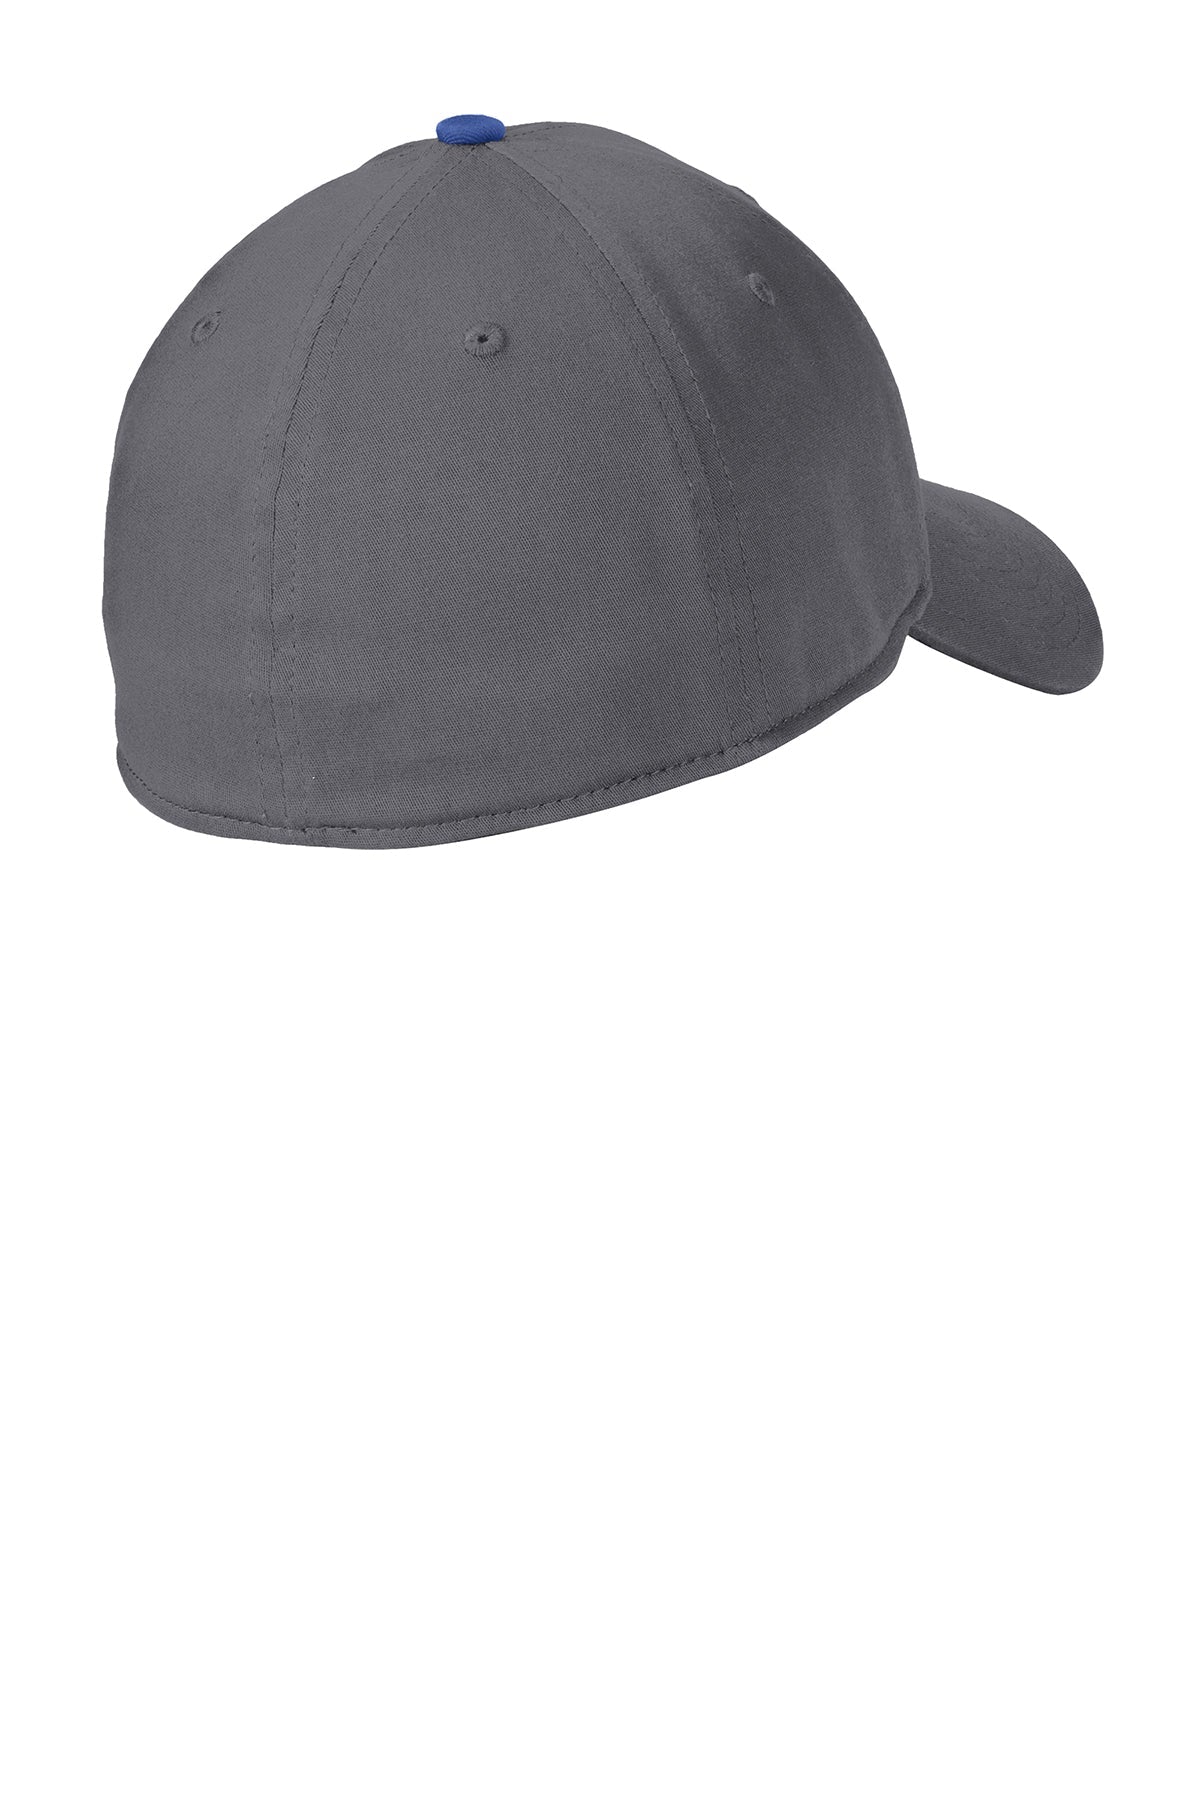 New Era Interception Branded Caps, Graphite/ Royal